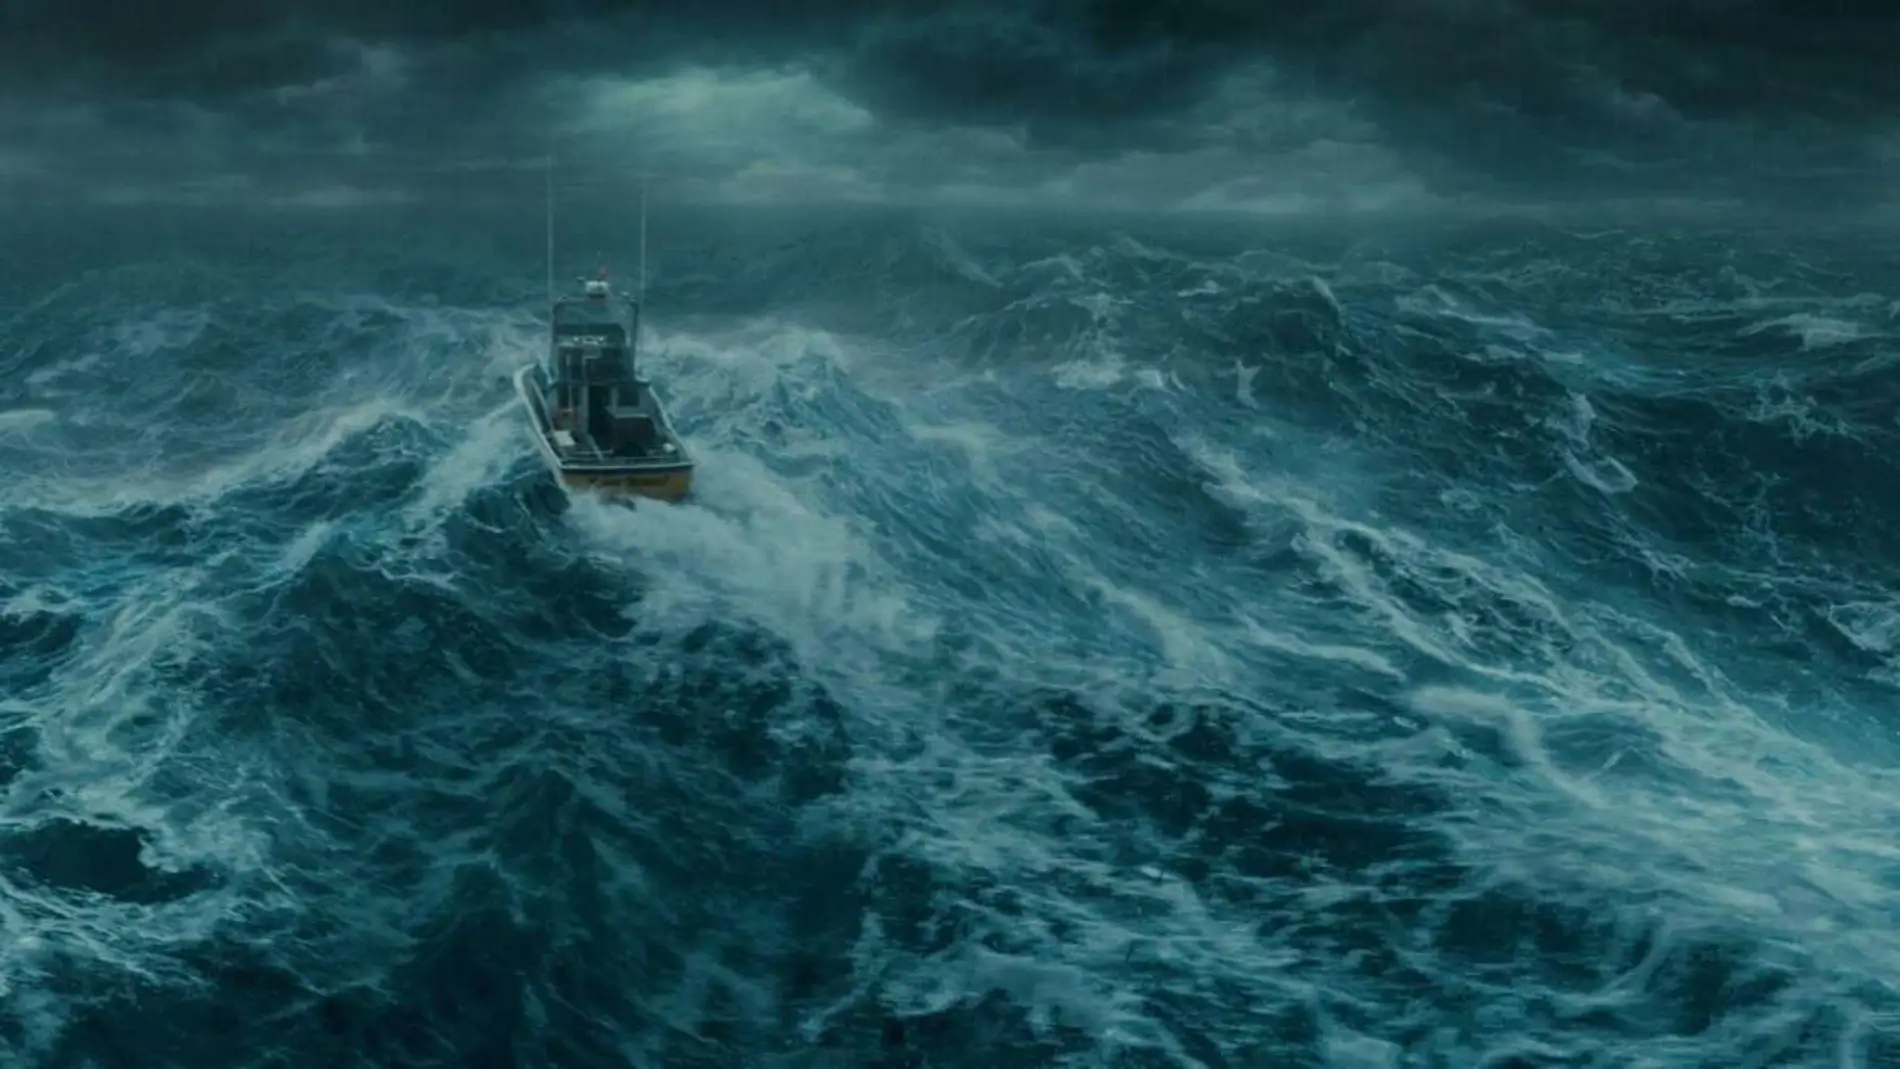 Fotograma de la película "La tormenta perfecta", que adaptaba el libro de Junger